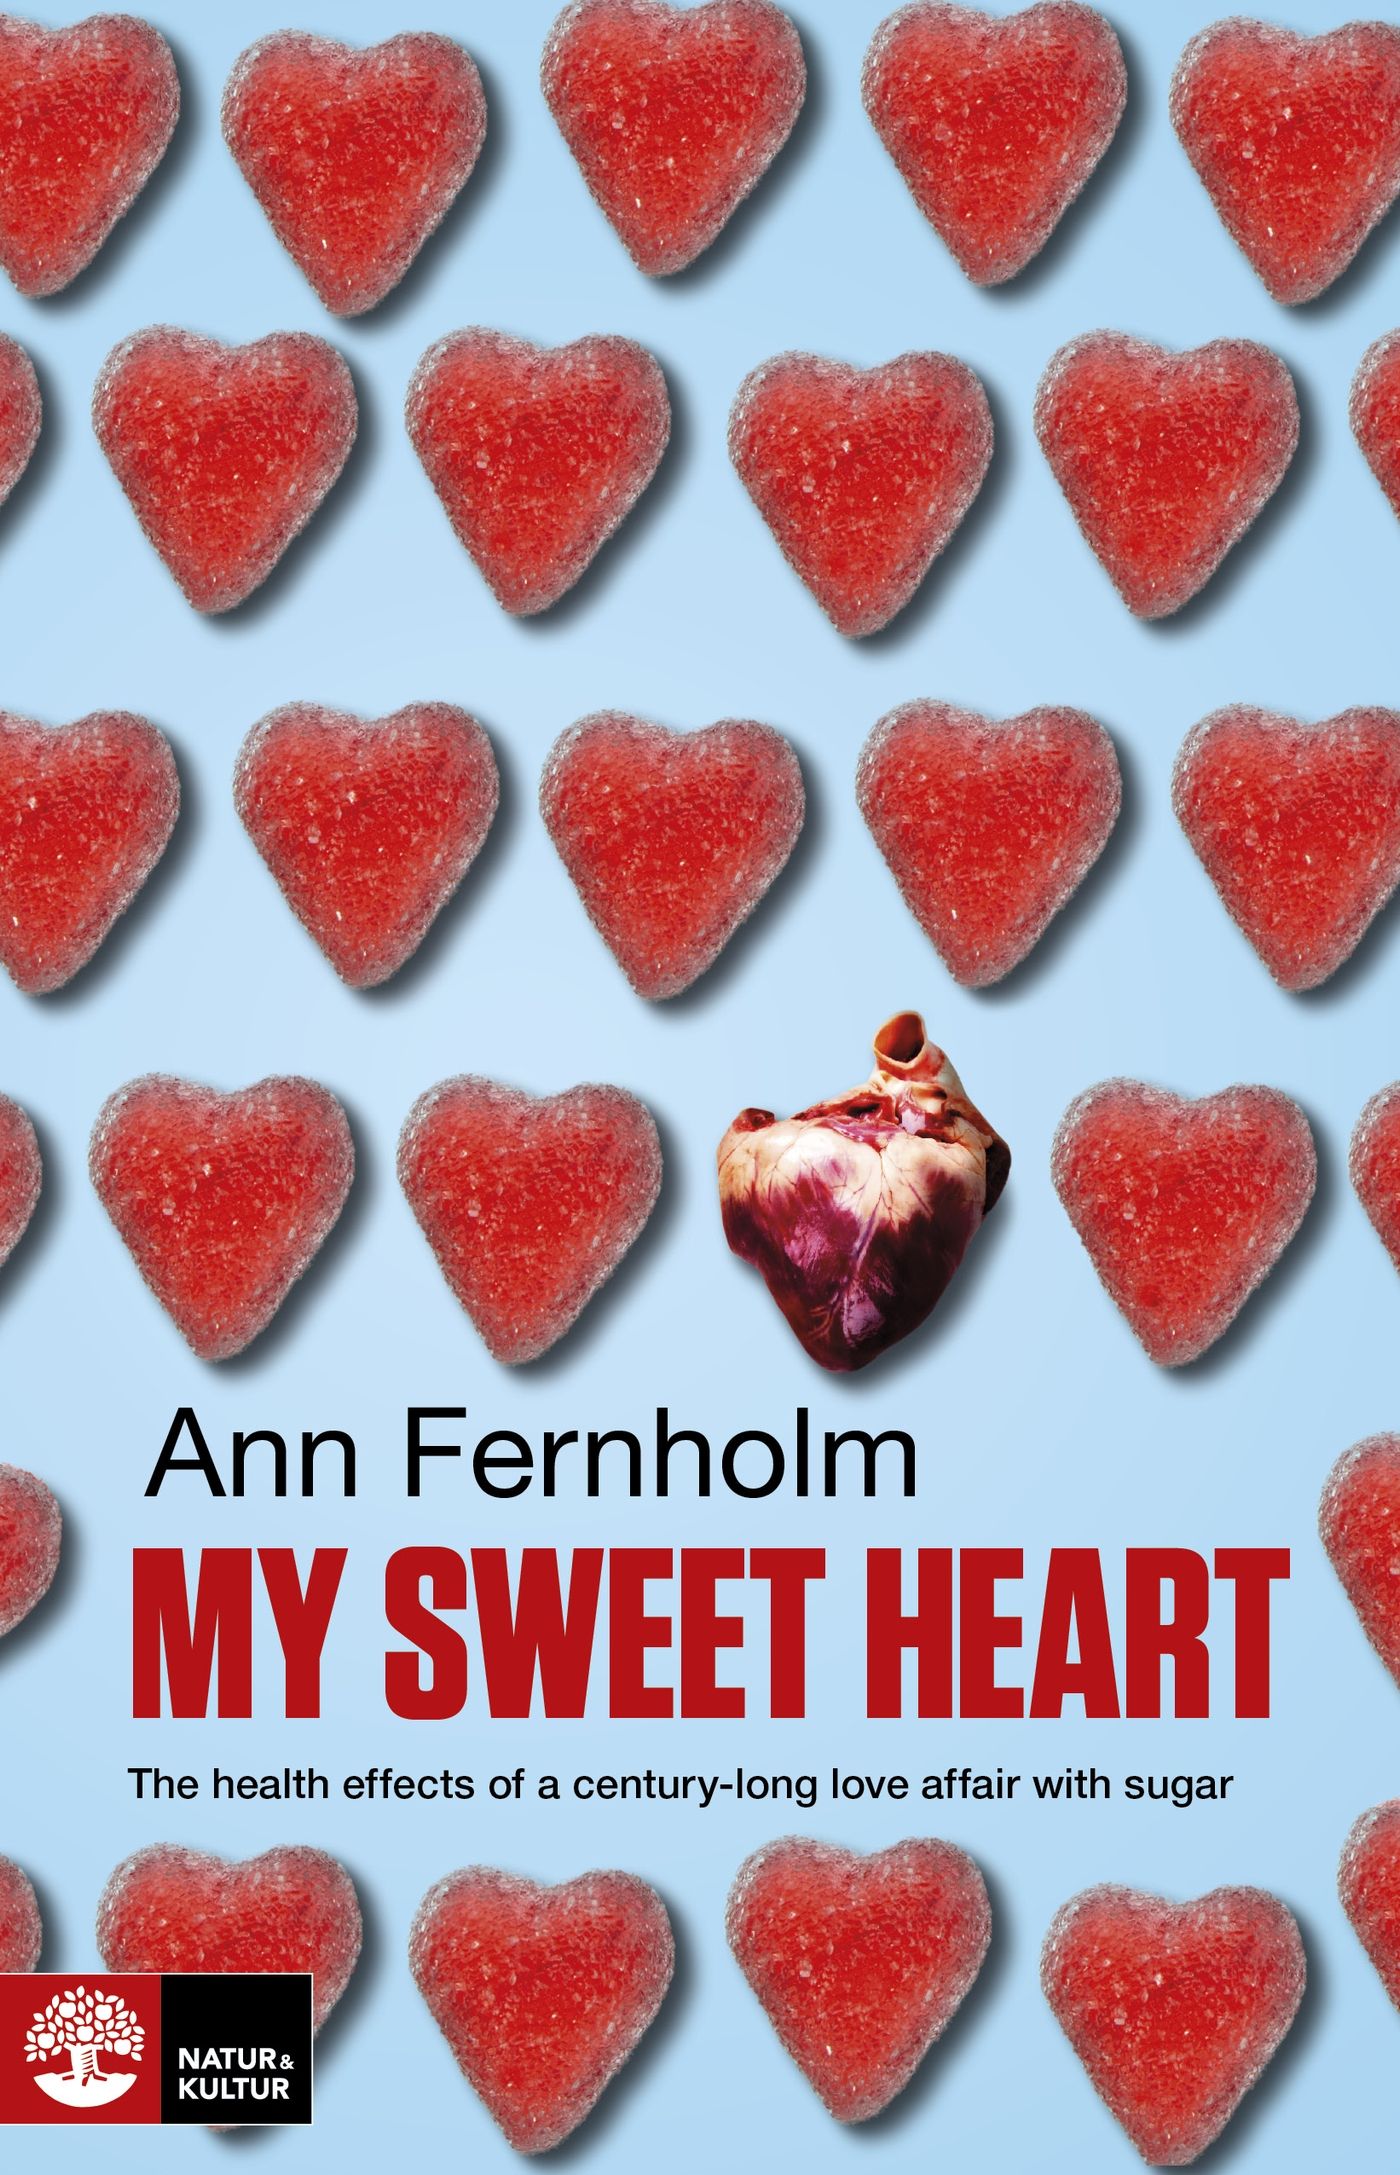 My Sweet Heart, e-bog af Ann Fernholm